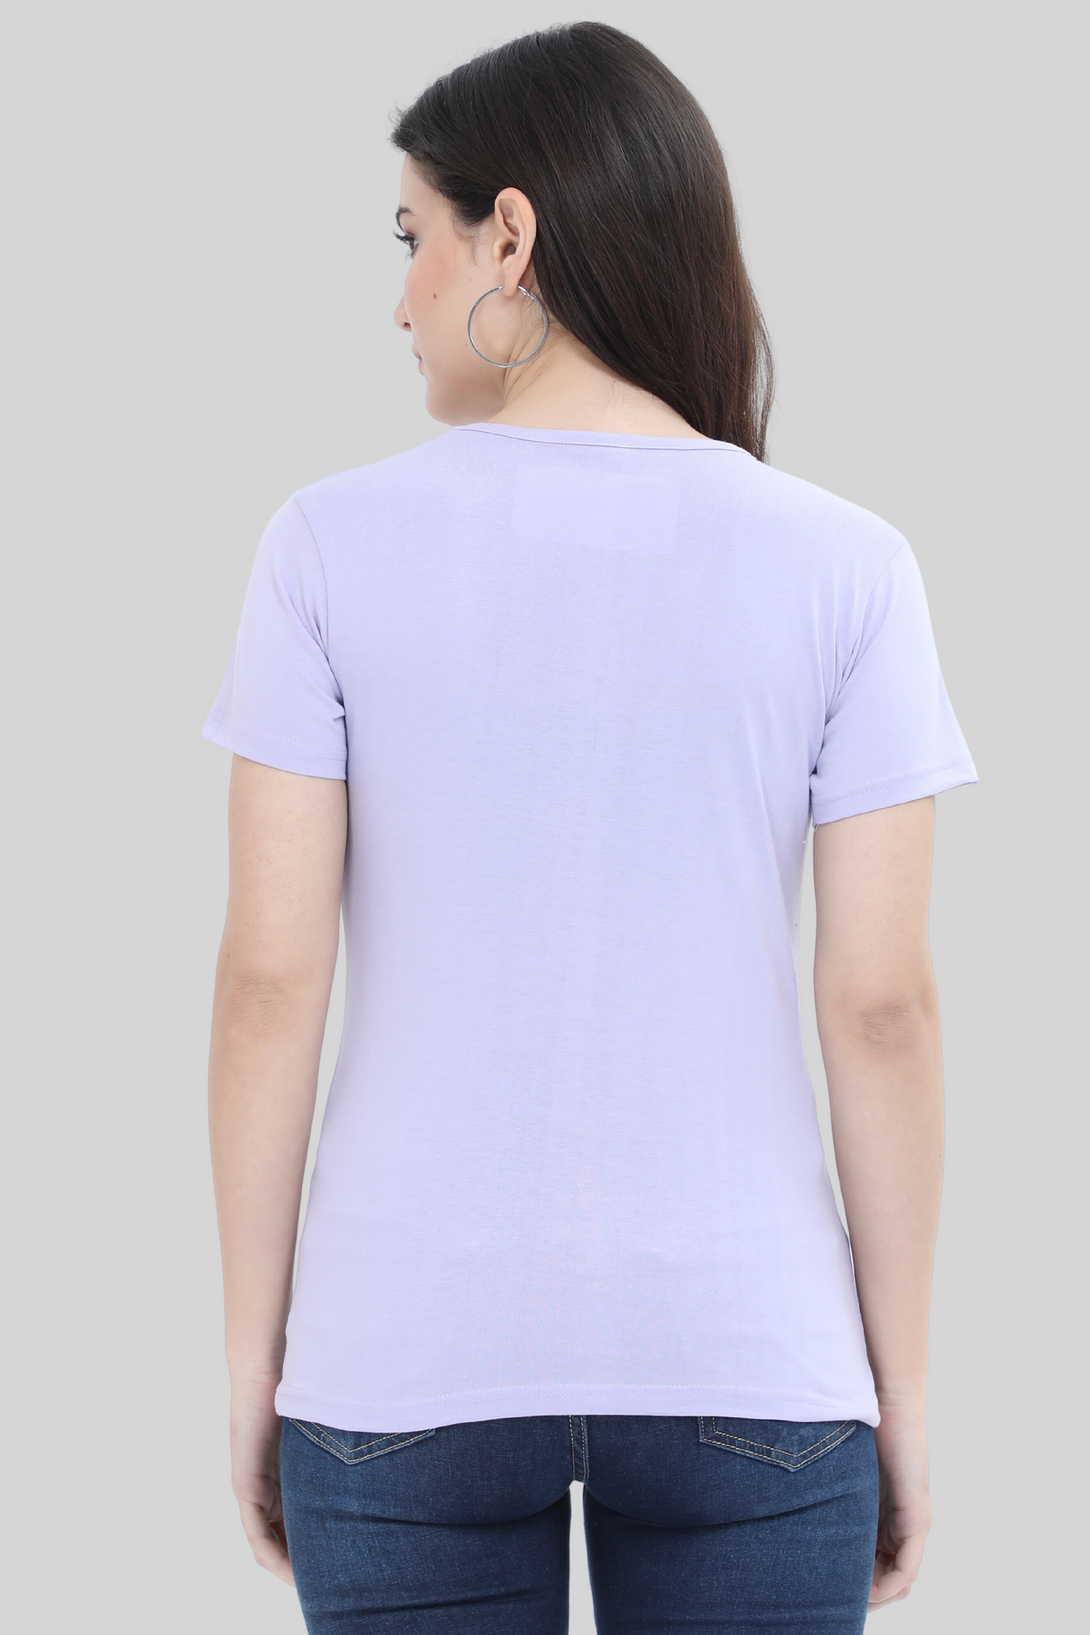 Lavender Scoop Neck T-Shirt For Women - WowWaves - 1